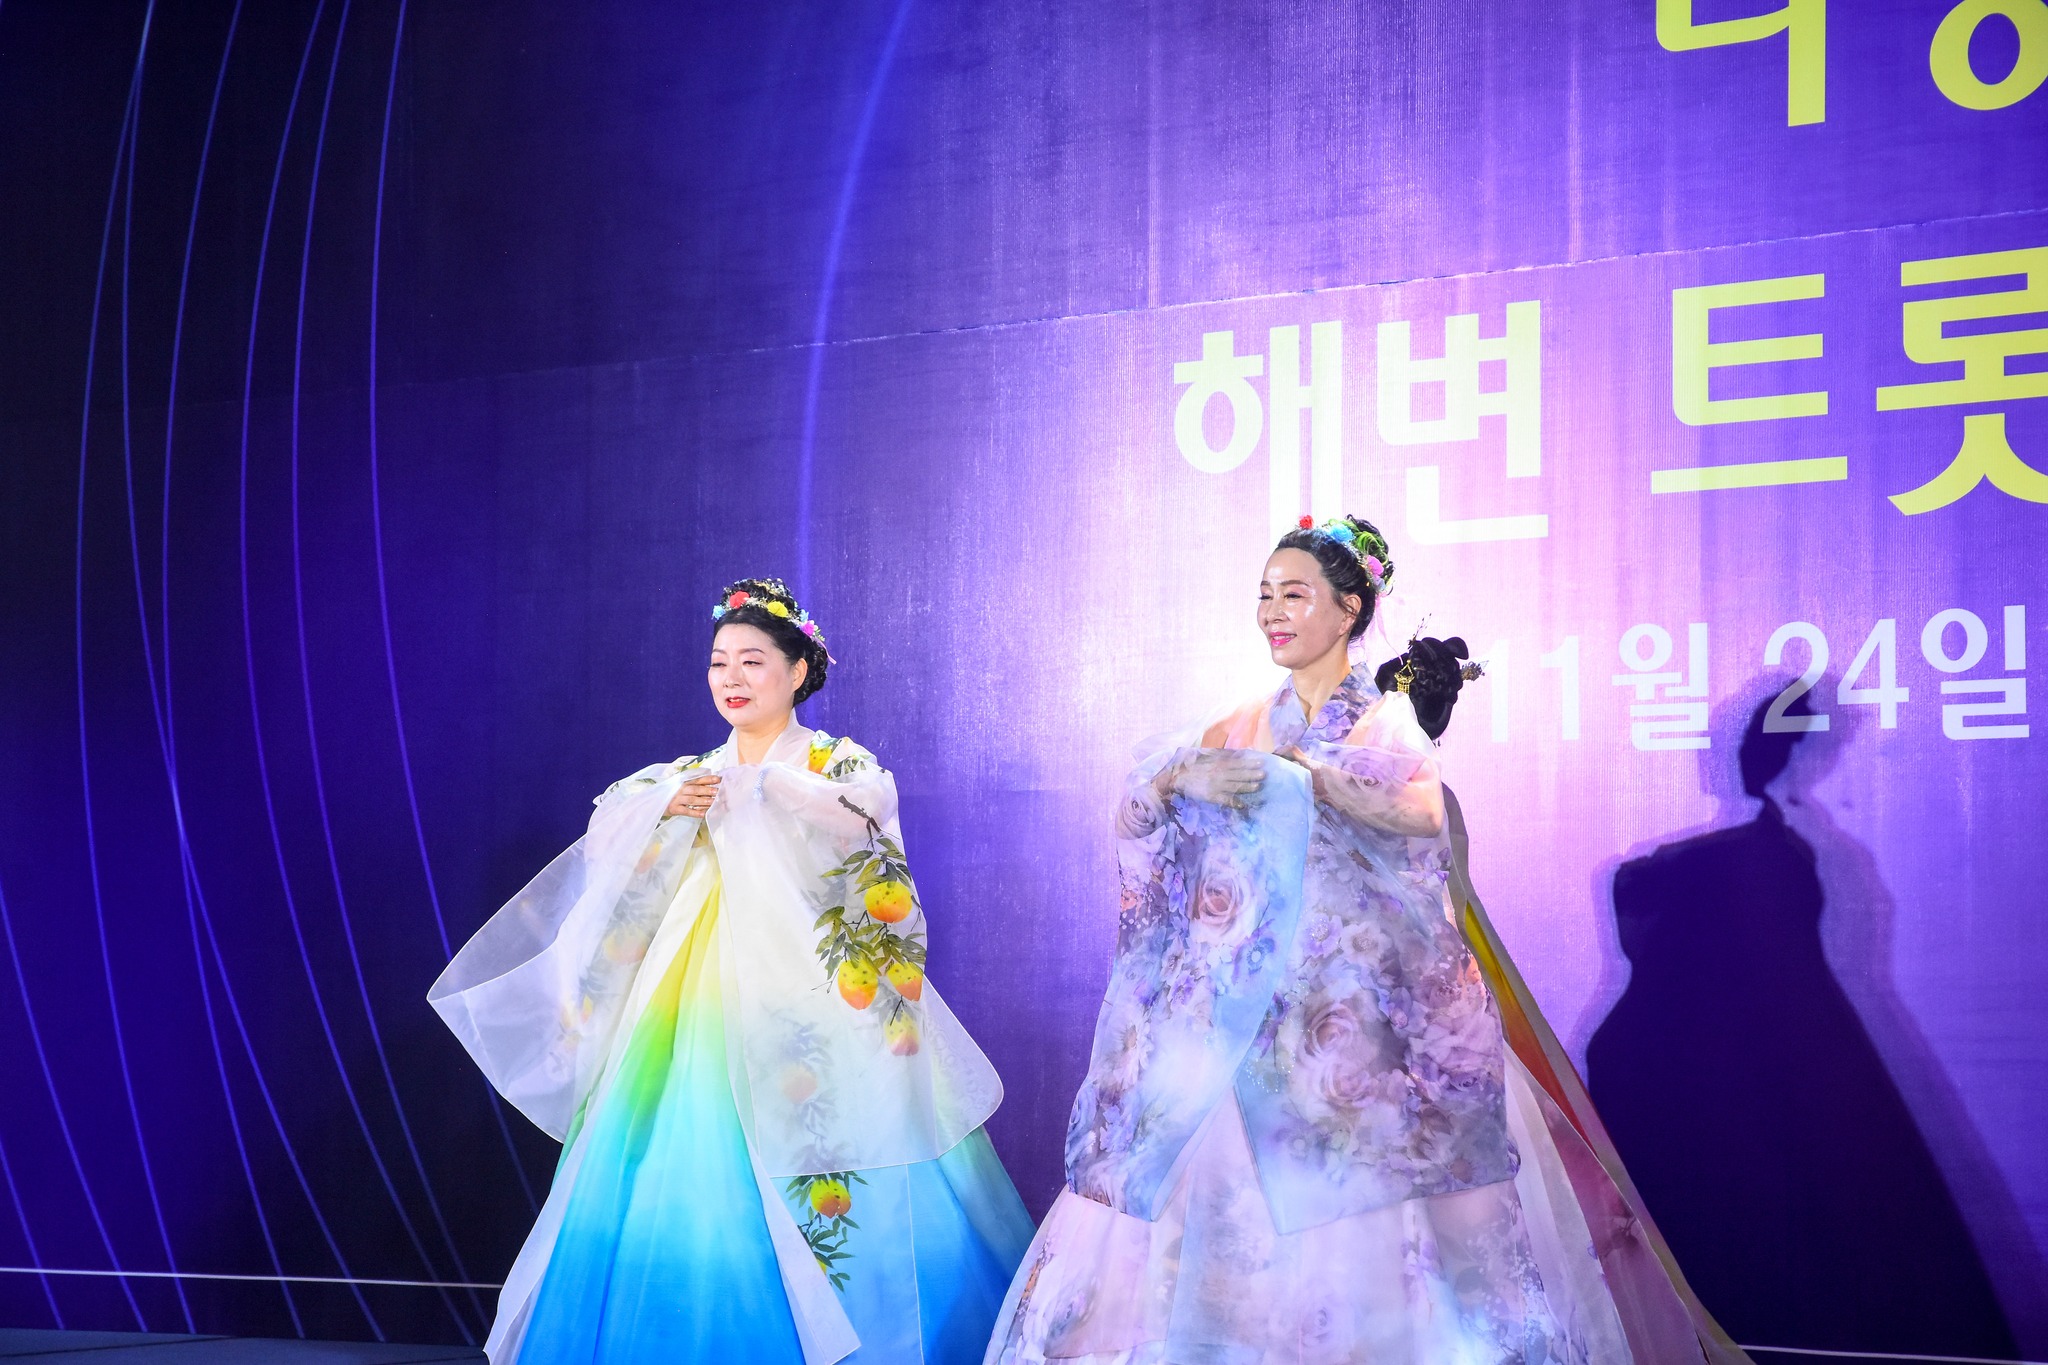 KOREAN TROT MUSIC CONCERT AT ARIYANA CONVENTION CENTRE